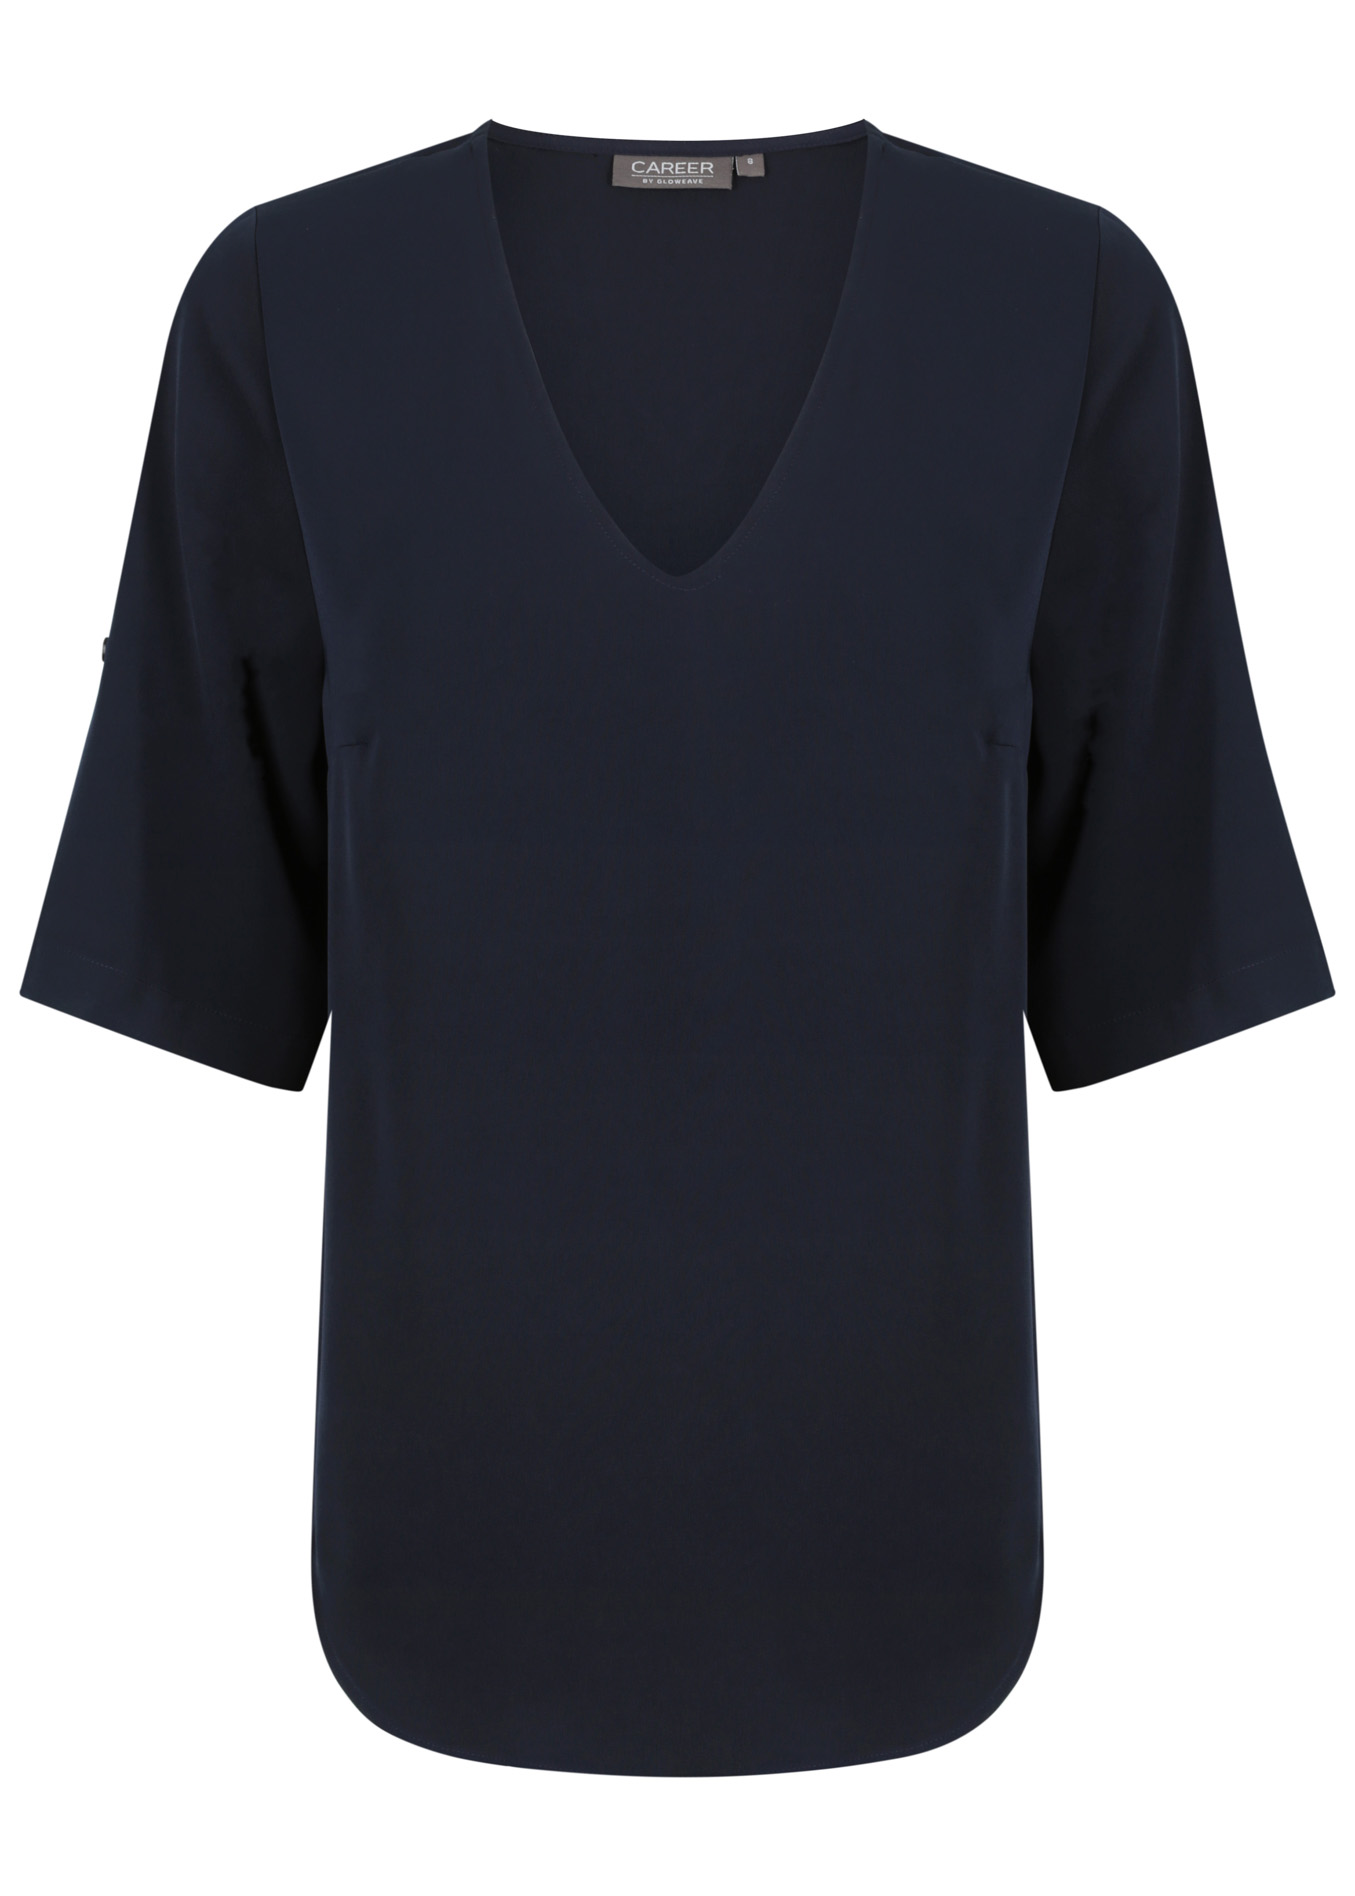 Reece Half Sleeve V-Neck Top - Navy - Uniform Edit